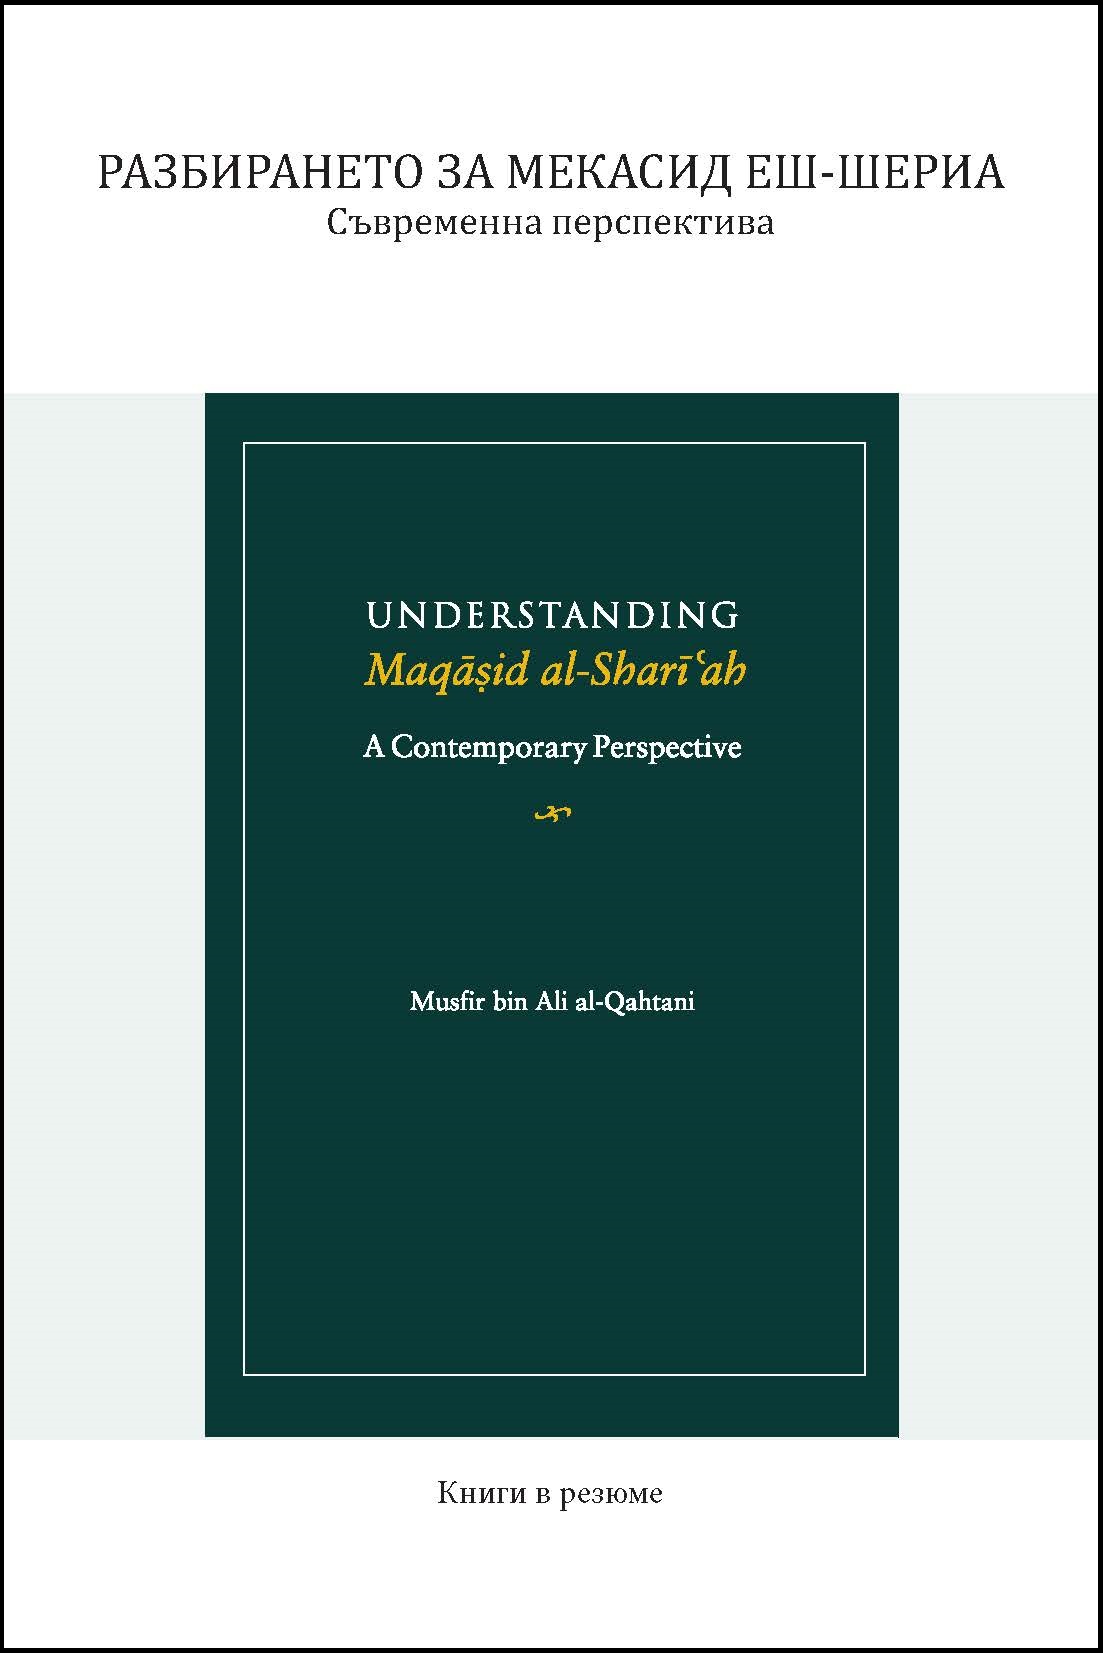 Bulgarian: Разбирането за мекасид еш-шeриа: съвременна перспектива (Book-in-Brief: Understanding Maqasid al-Shari’ah: A Contemporary Perspective)